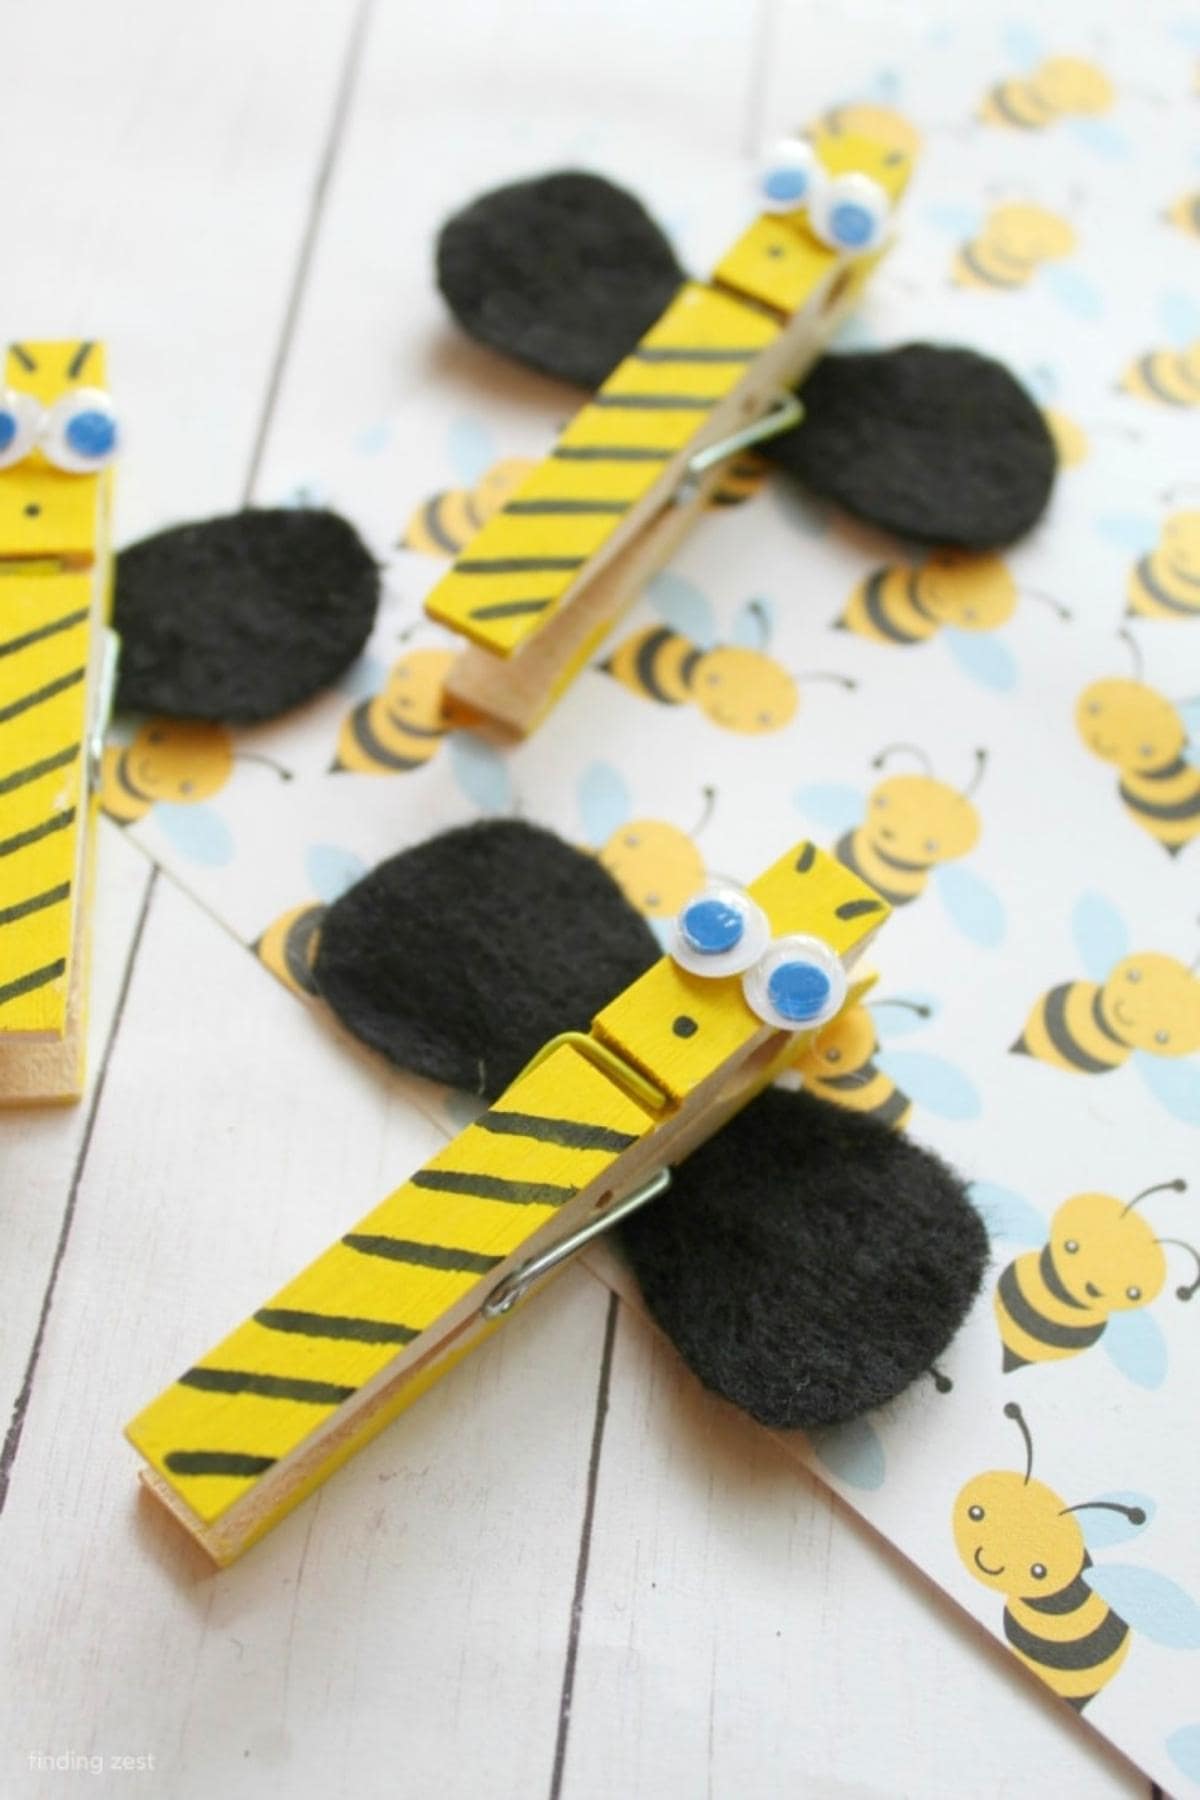 bumble bee clothes pin craft idea